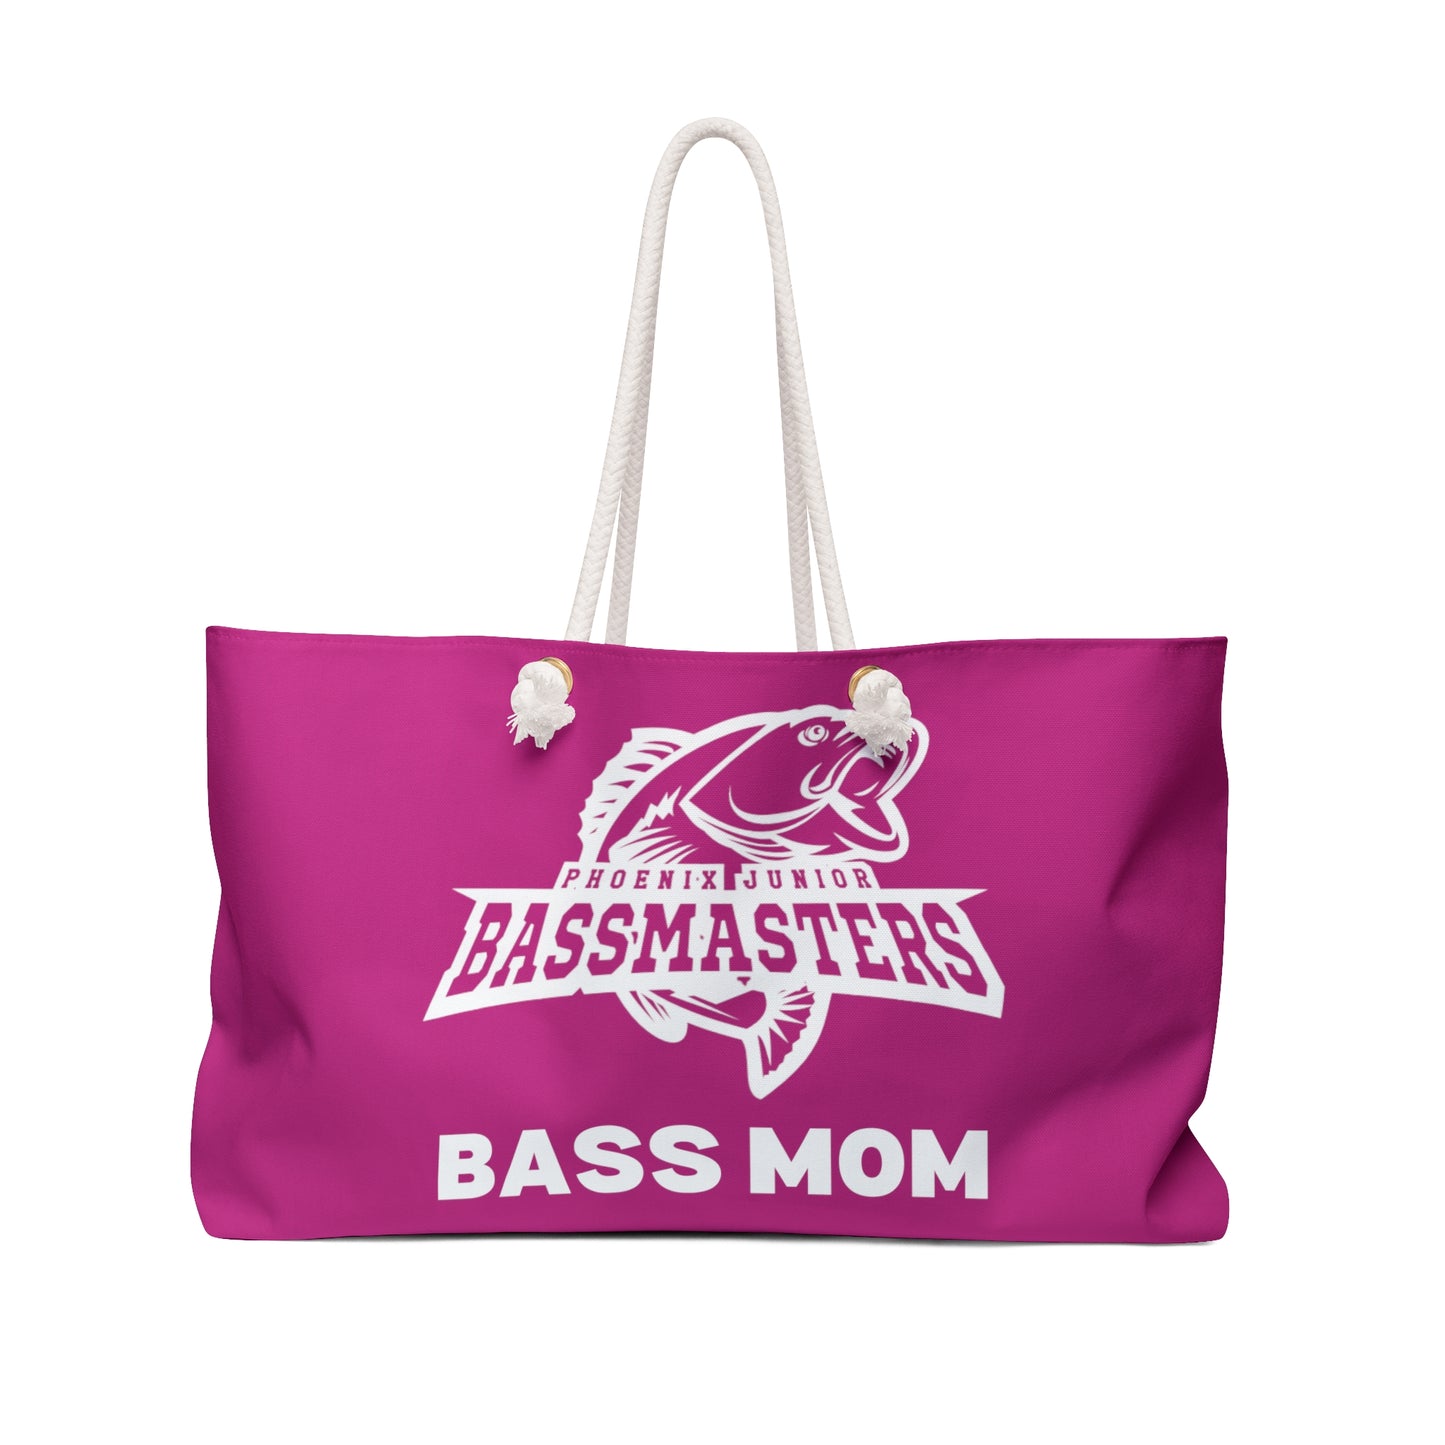 Junior Bassmasters - BASS MOM - Weekender Bag (Pink)